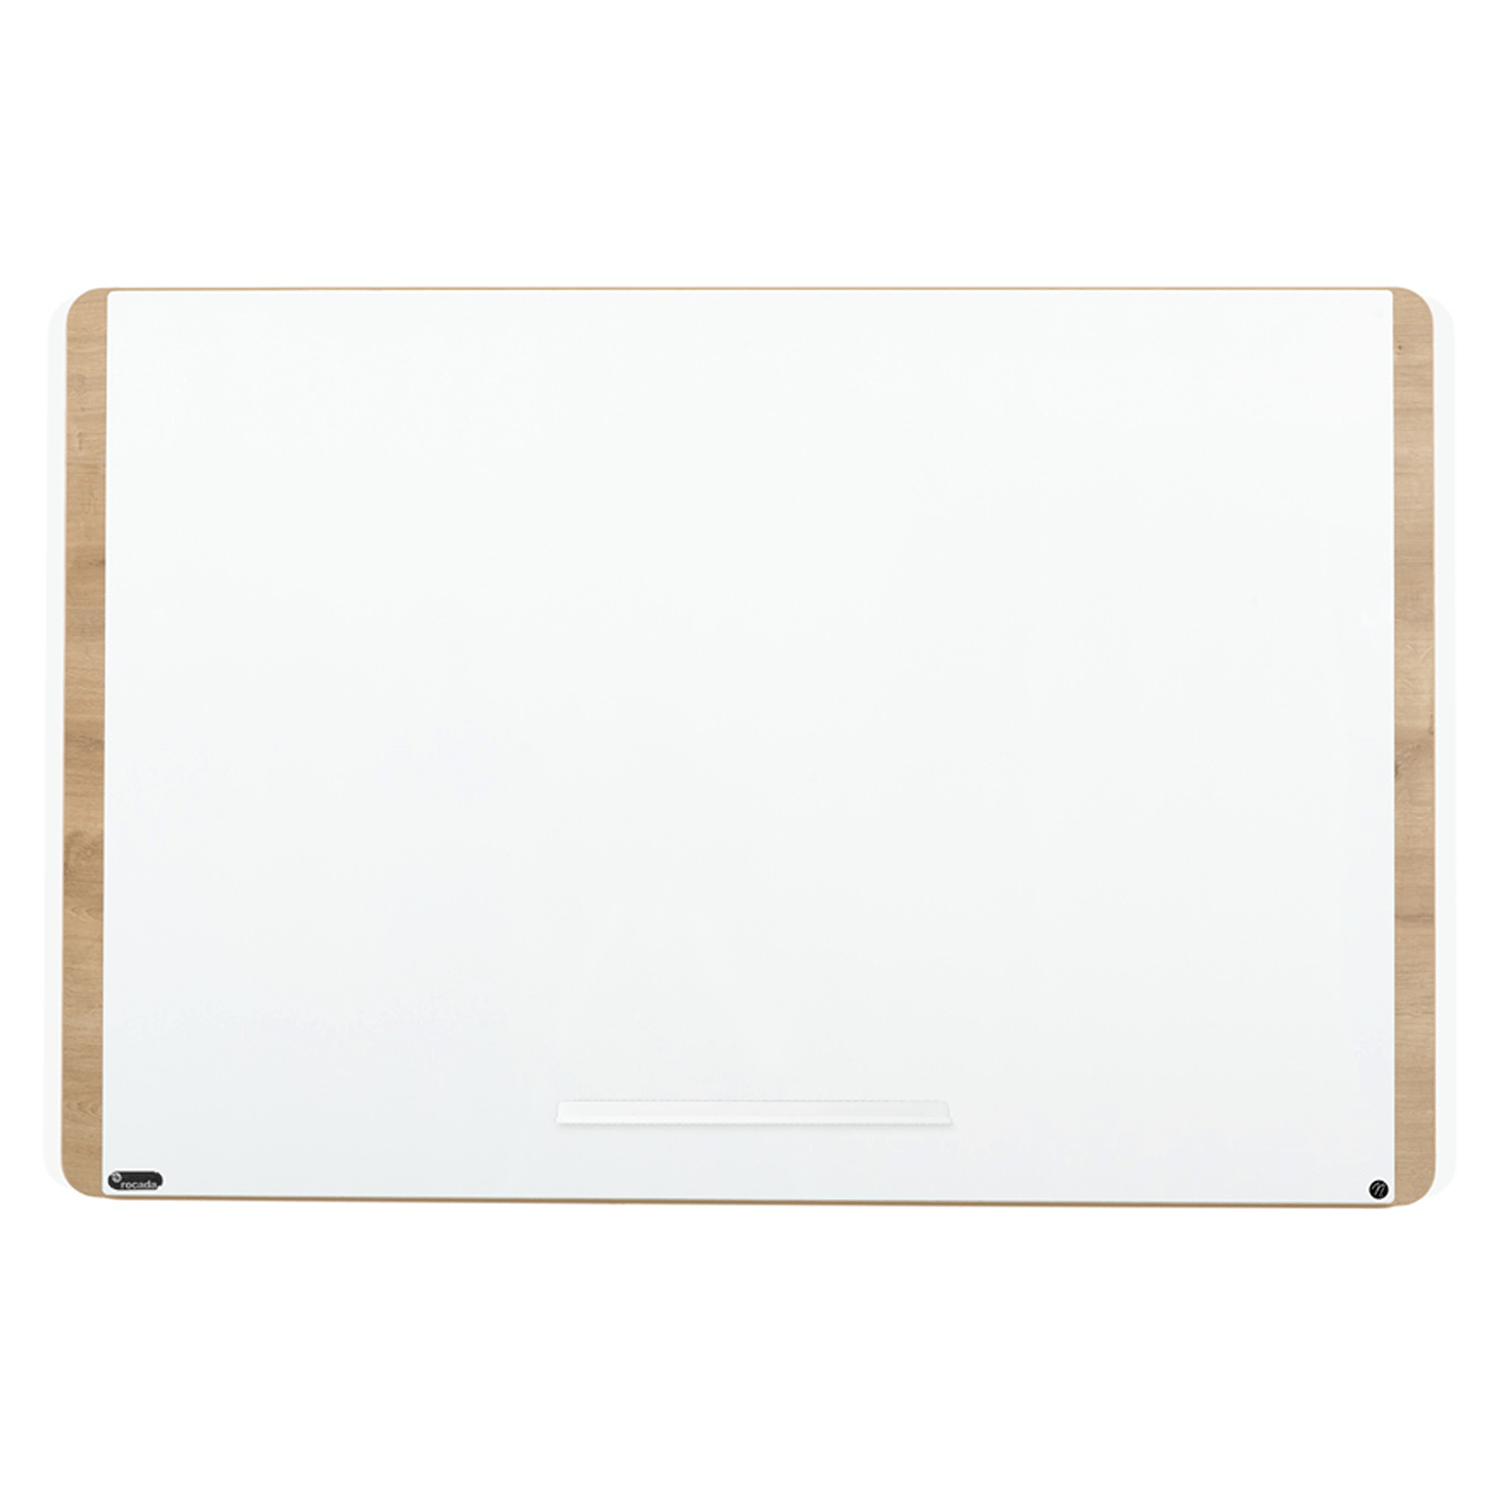 Se Rocada Natur whiteboard 75 x 115 cm. hos Naga.dk